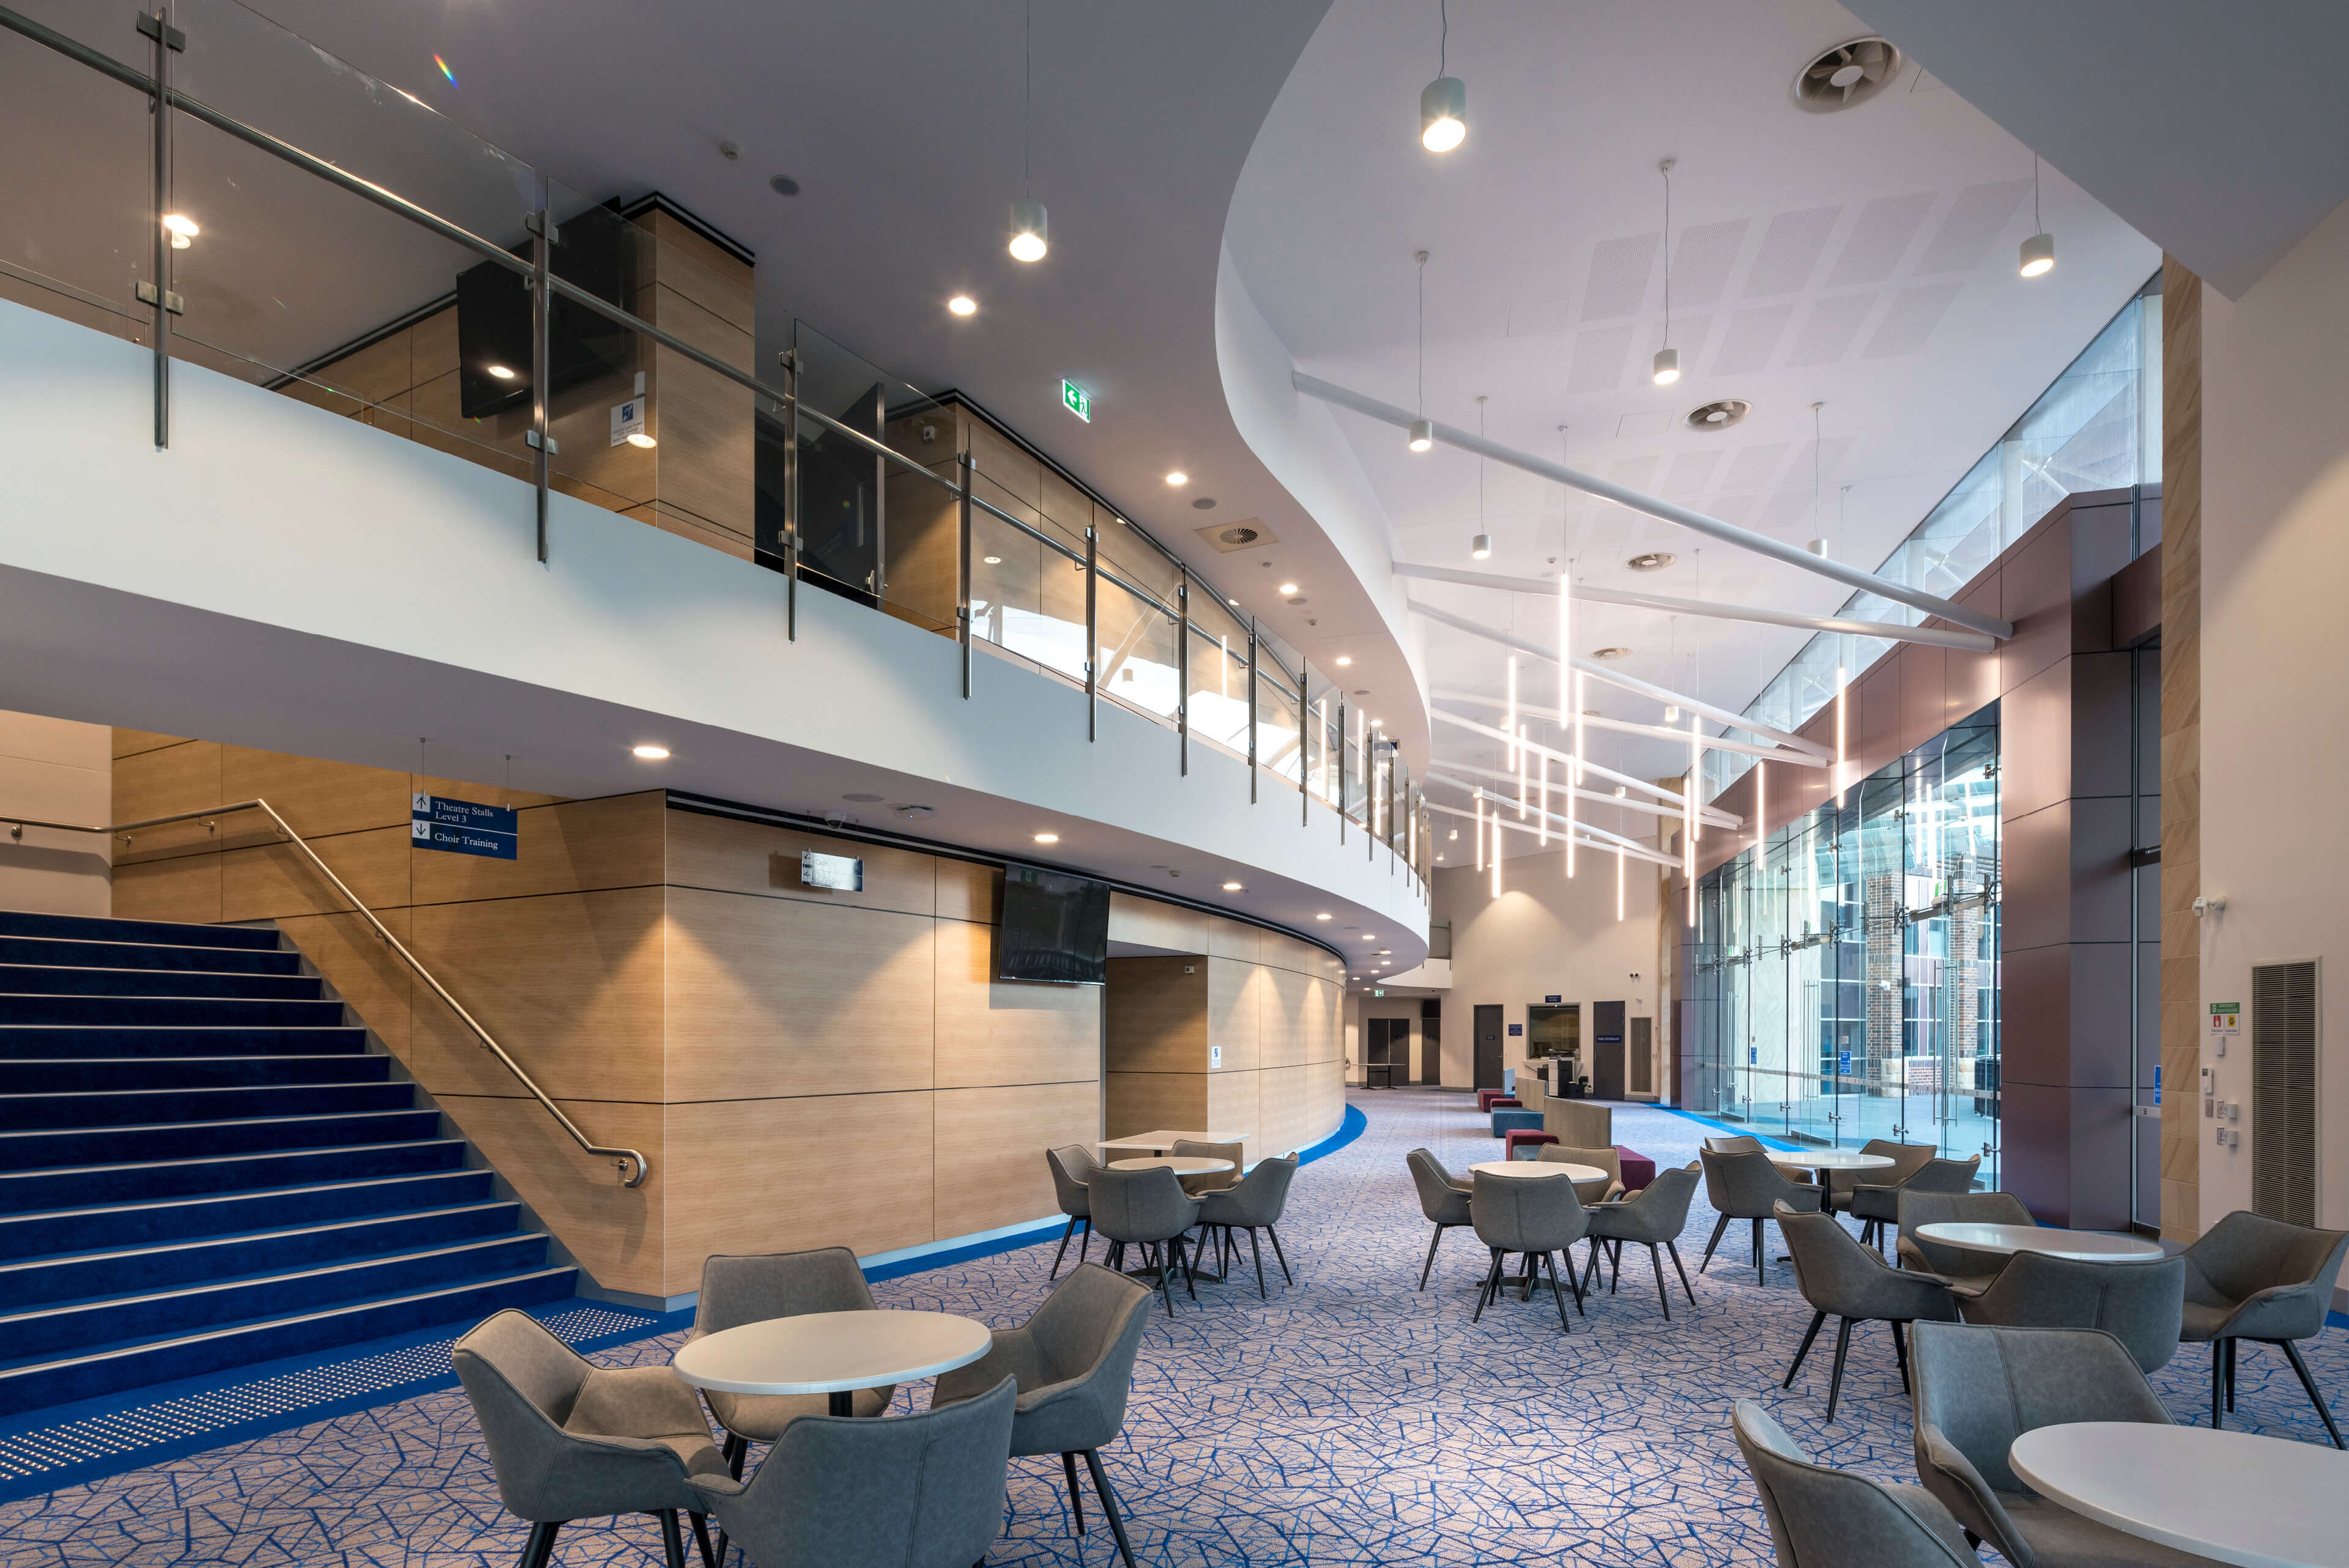 3 main foyer and entrance at knox performing arts centre taylor construction education